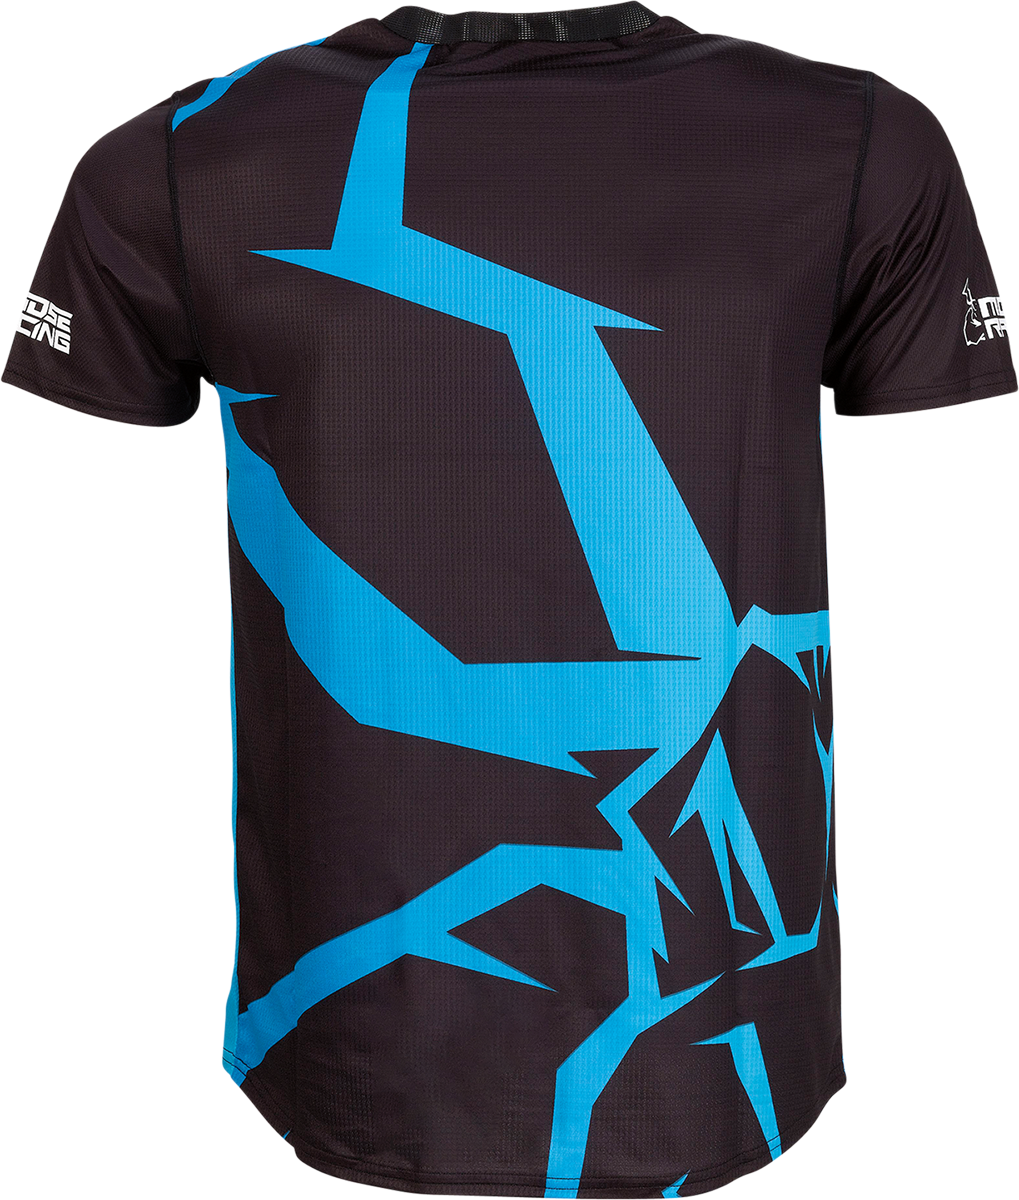 Camiseta MTB MOOSE RACING - Azul - Grande 5020-0206 